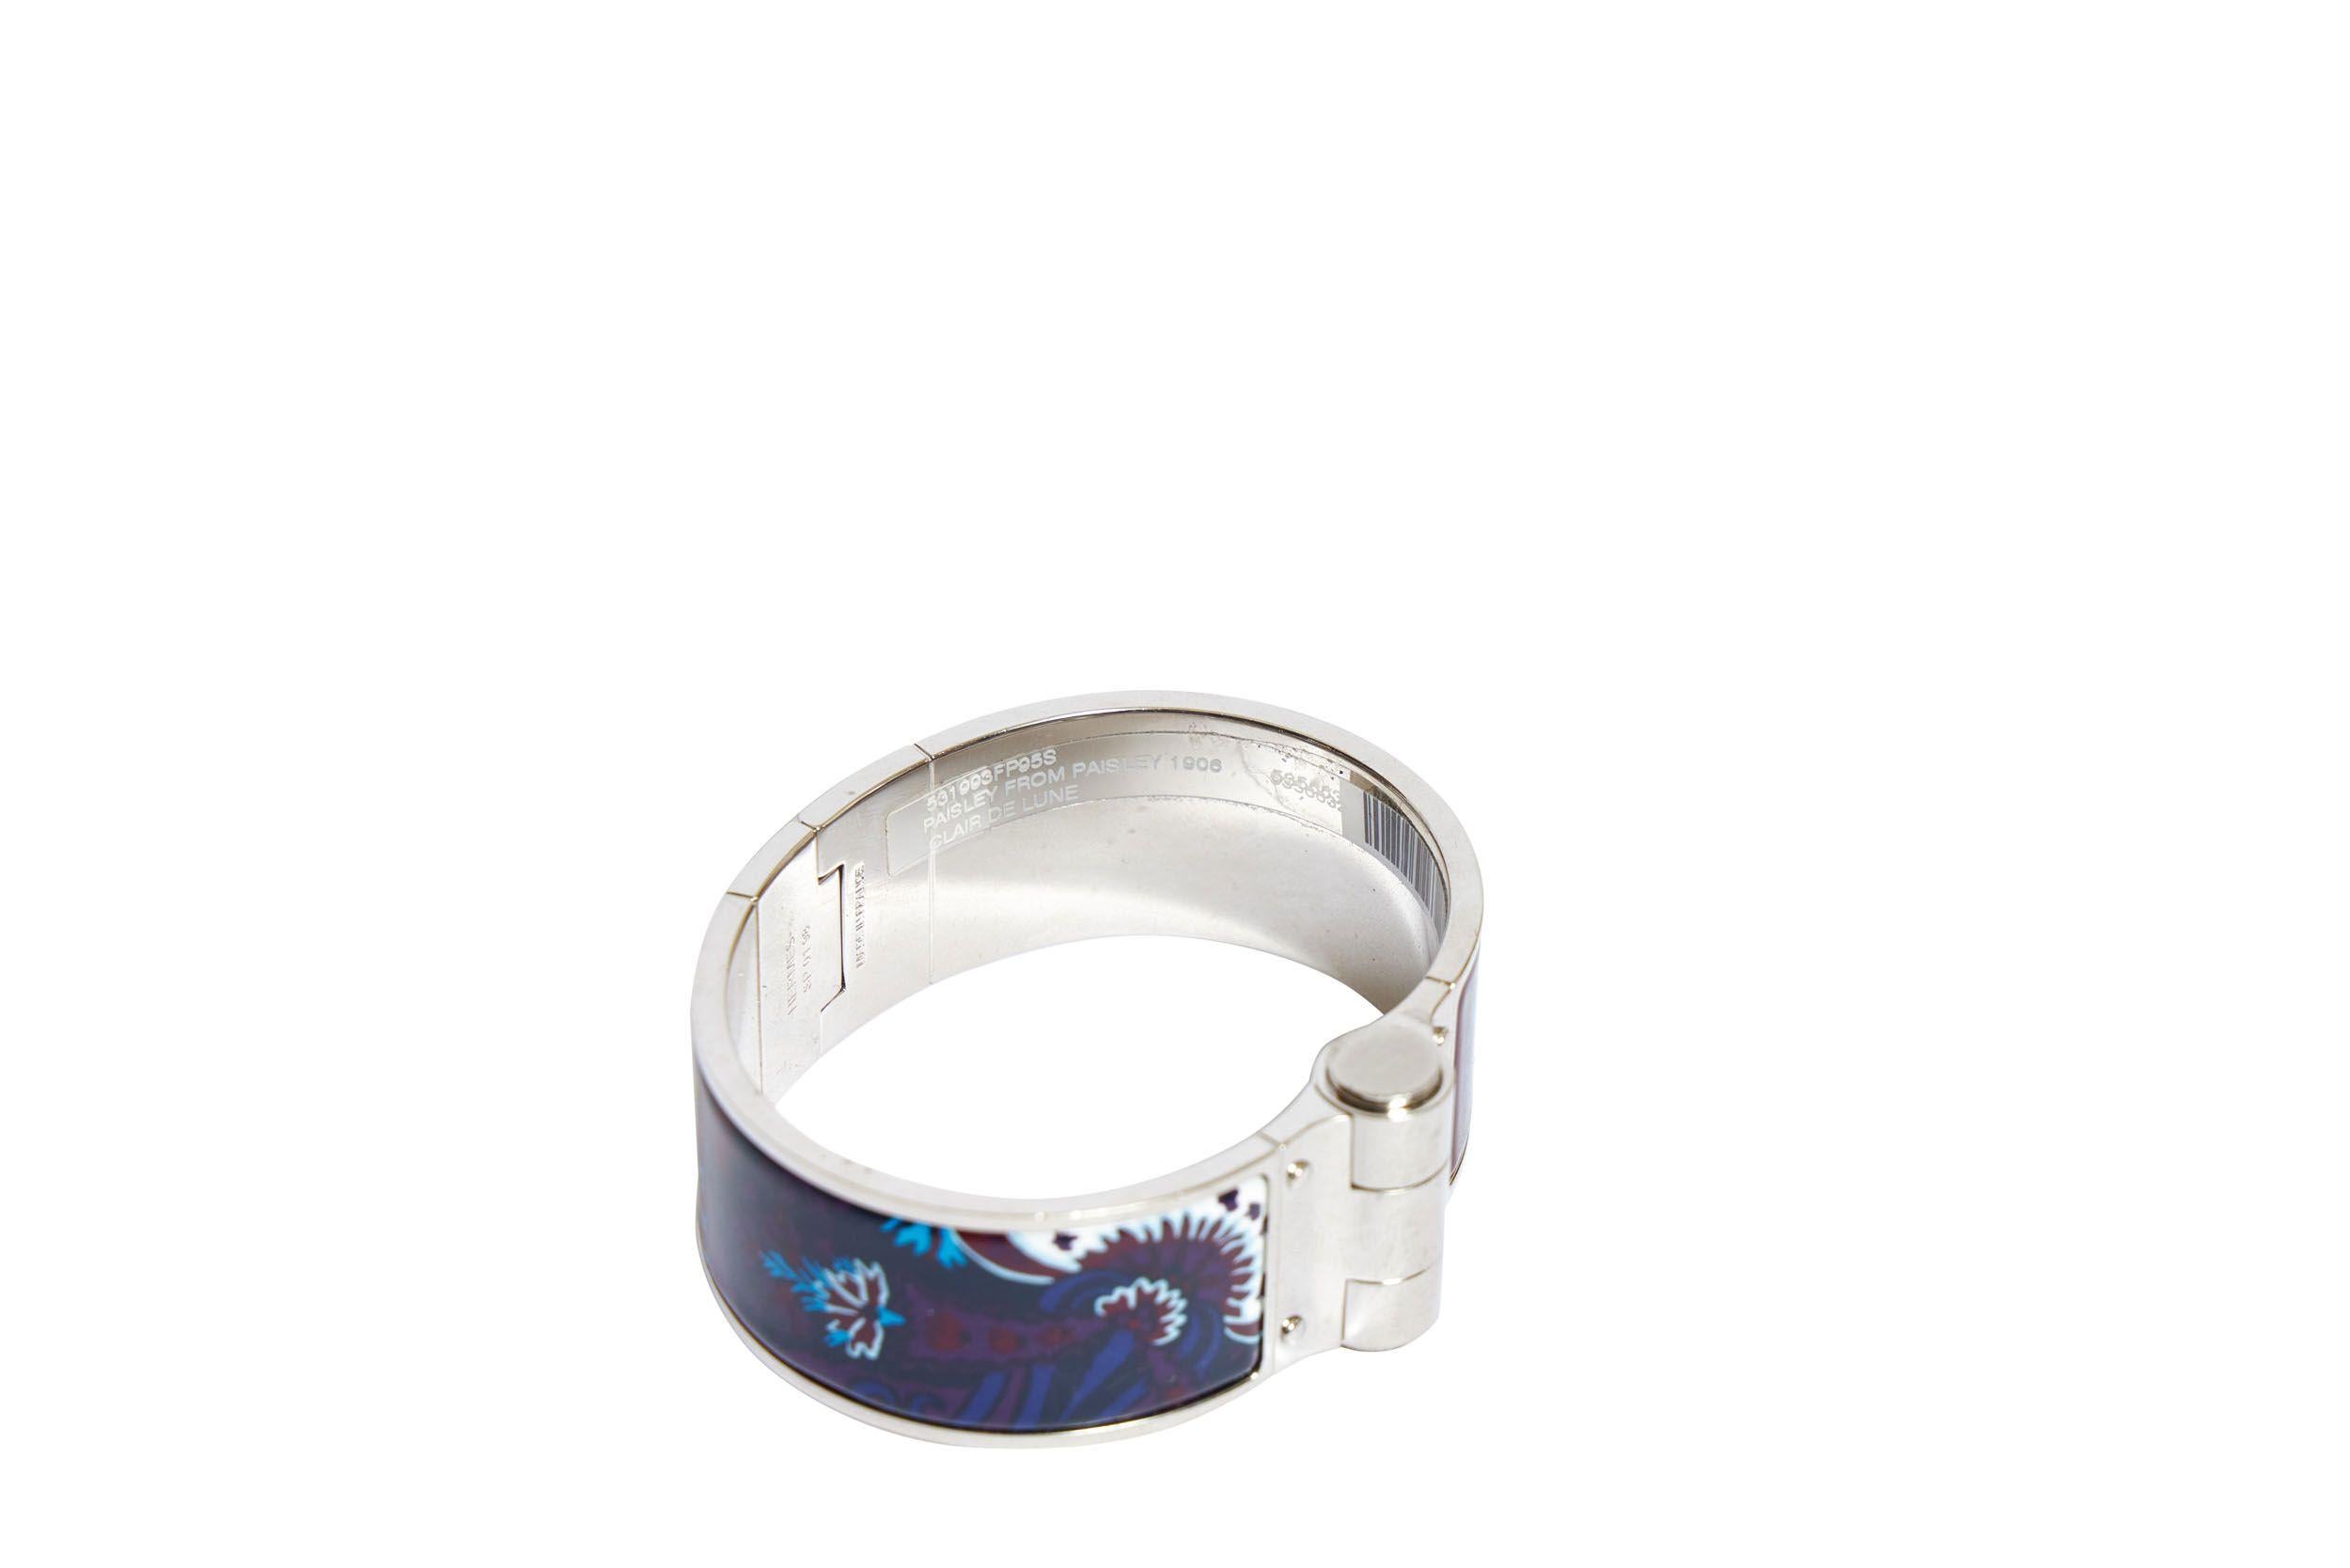 Hermes multicolor printed enamel Clic Clac bracelet with palladium tone hardware Comes with original box
